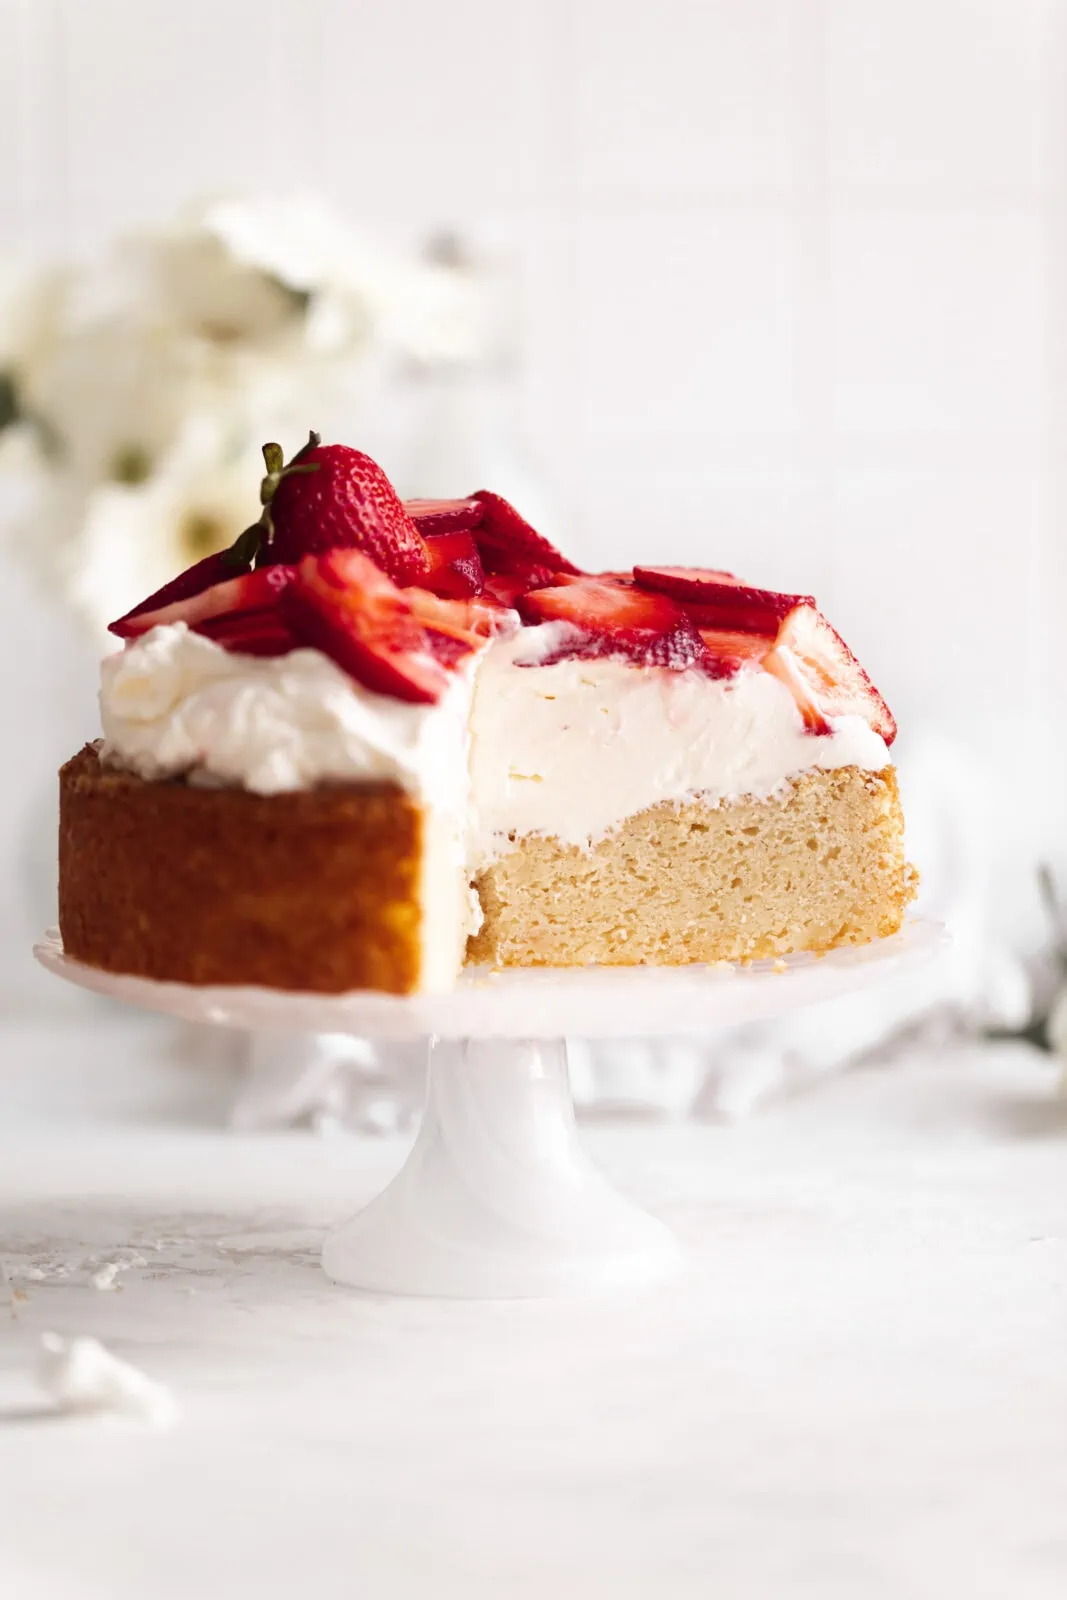 strawberry shortcake on a cake stand